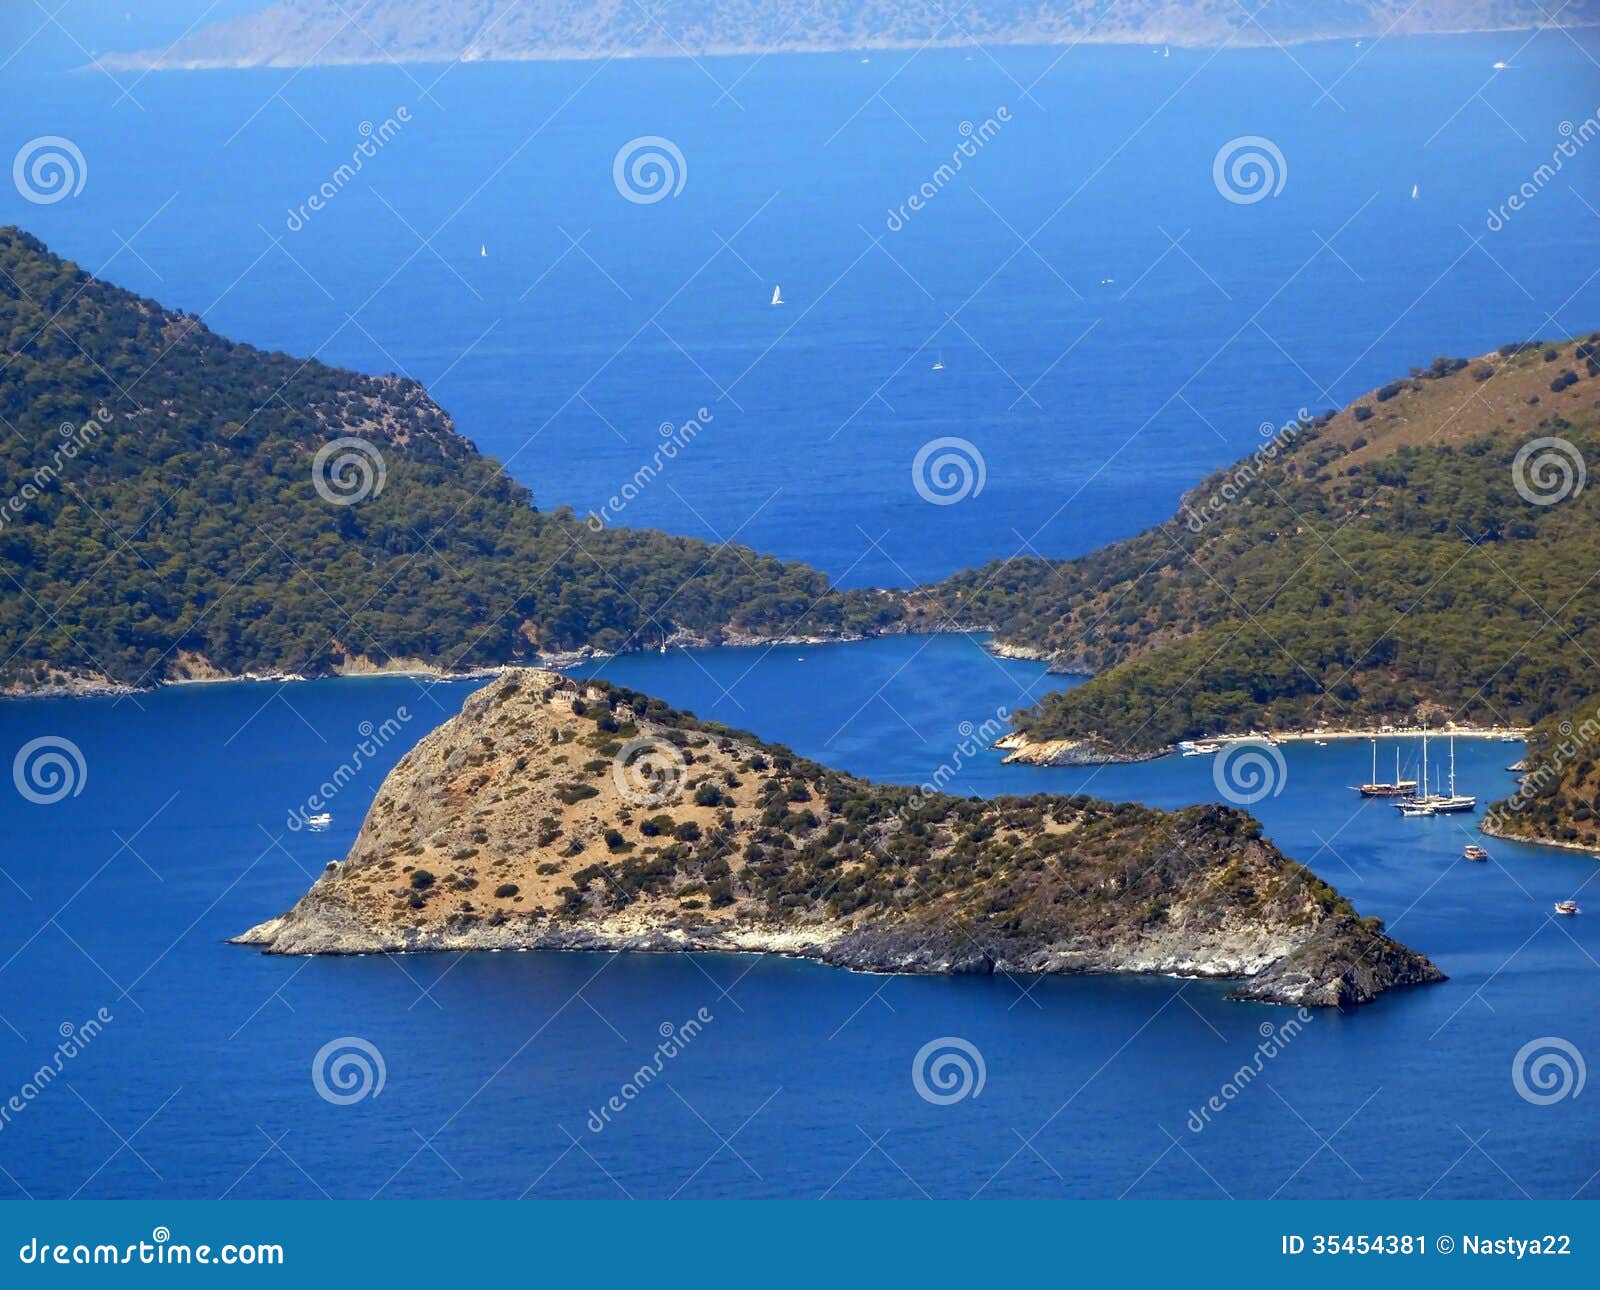 Coastline Landscape of Mediterranean Sea Turkey Stock Image - Image of ...